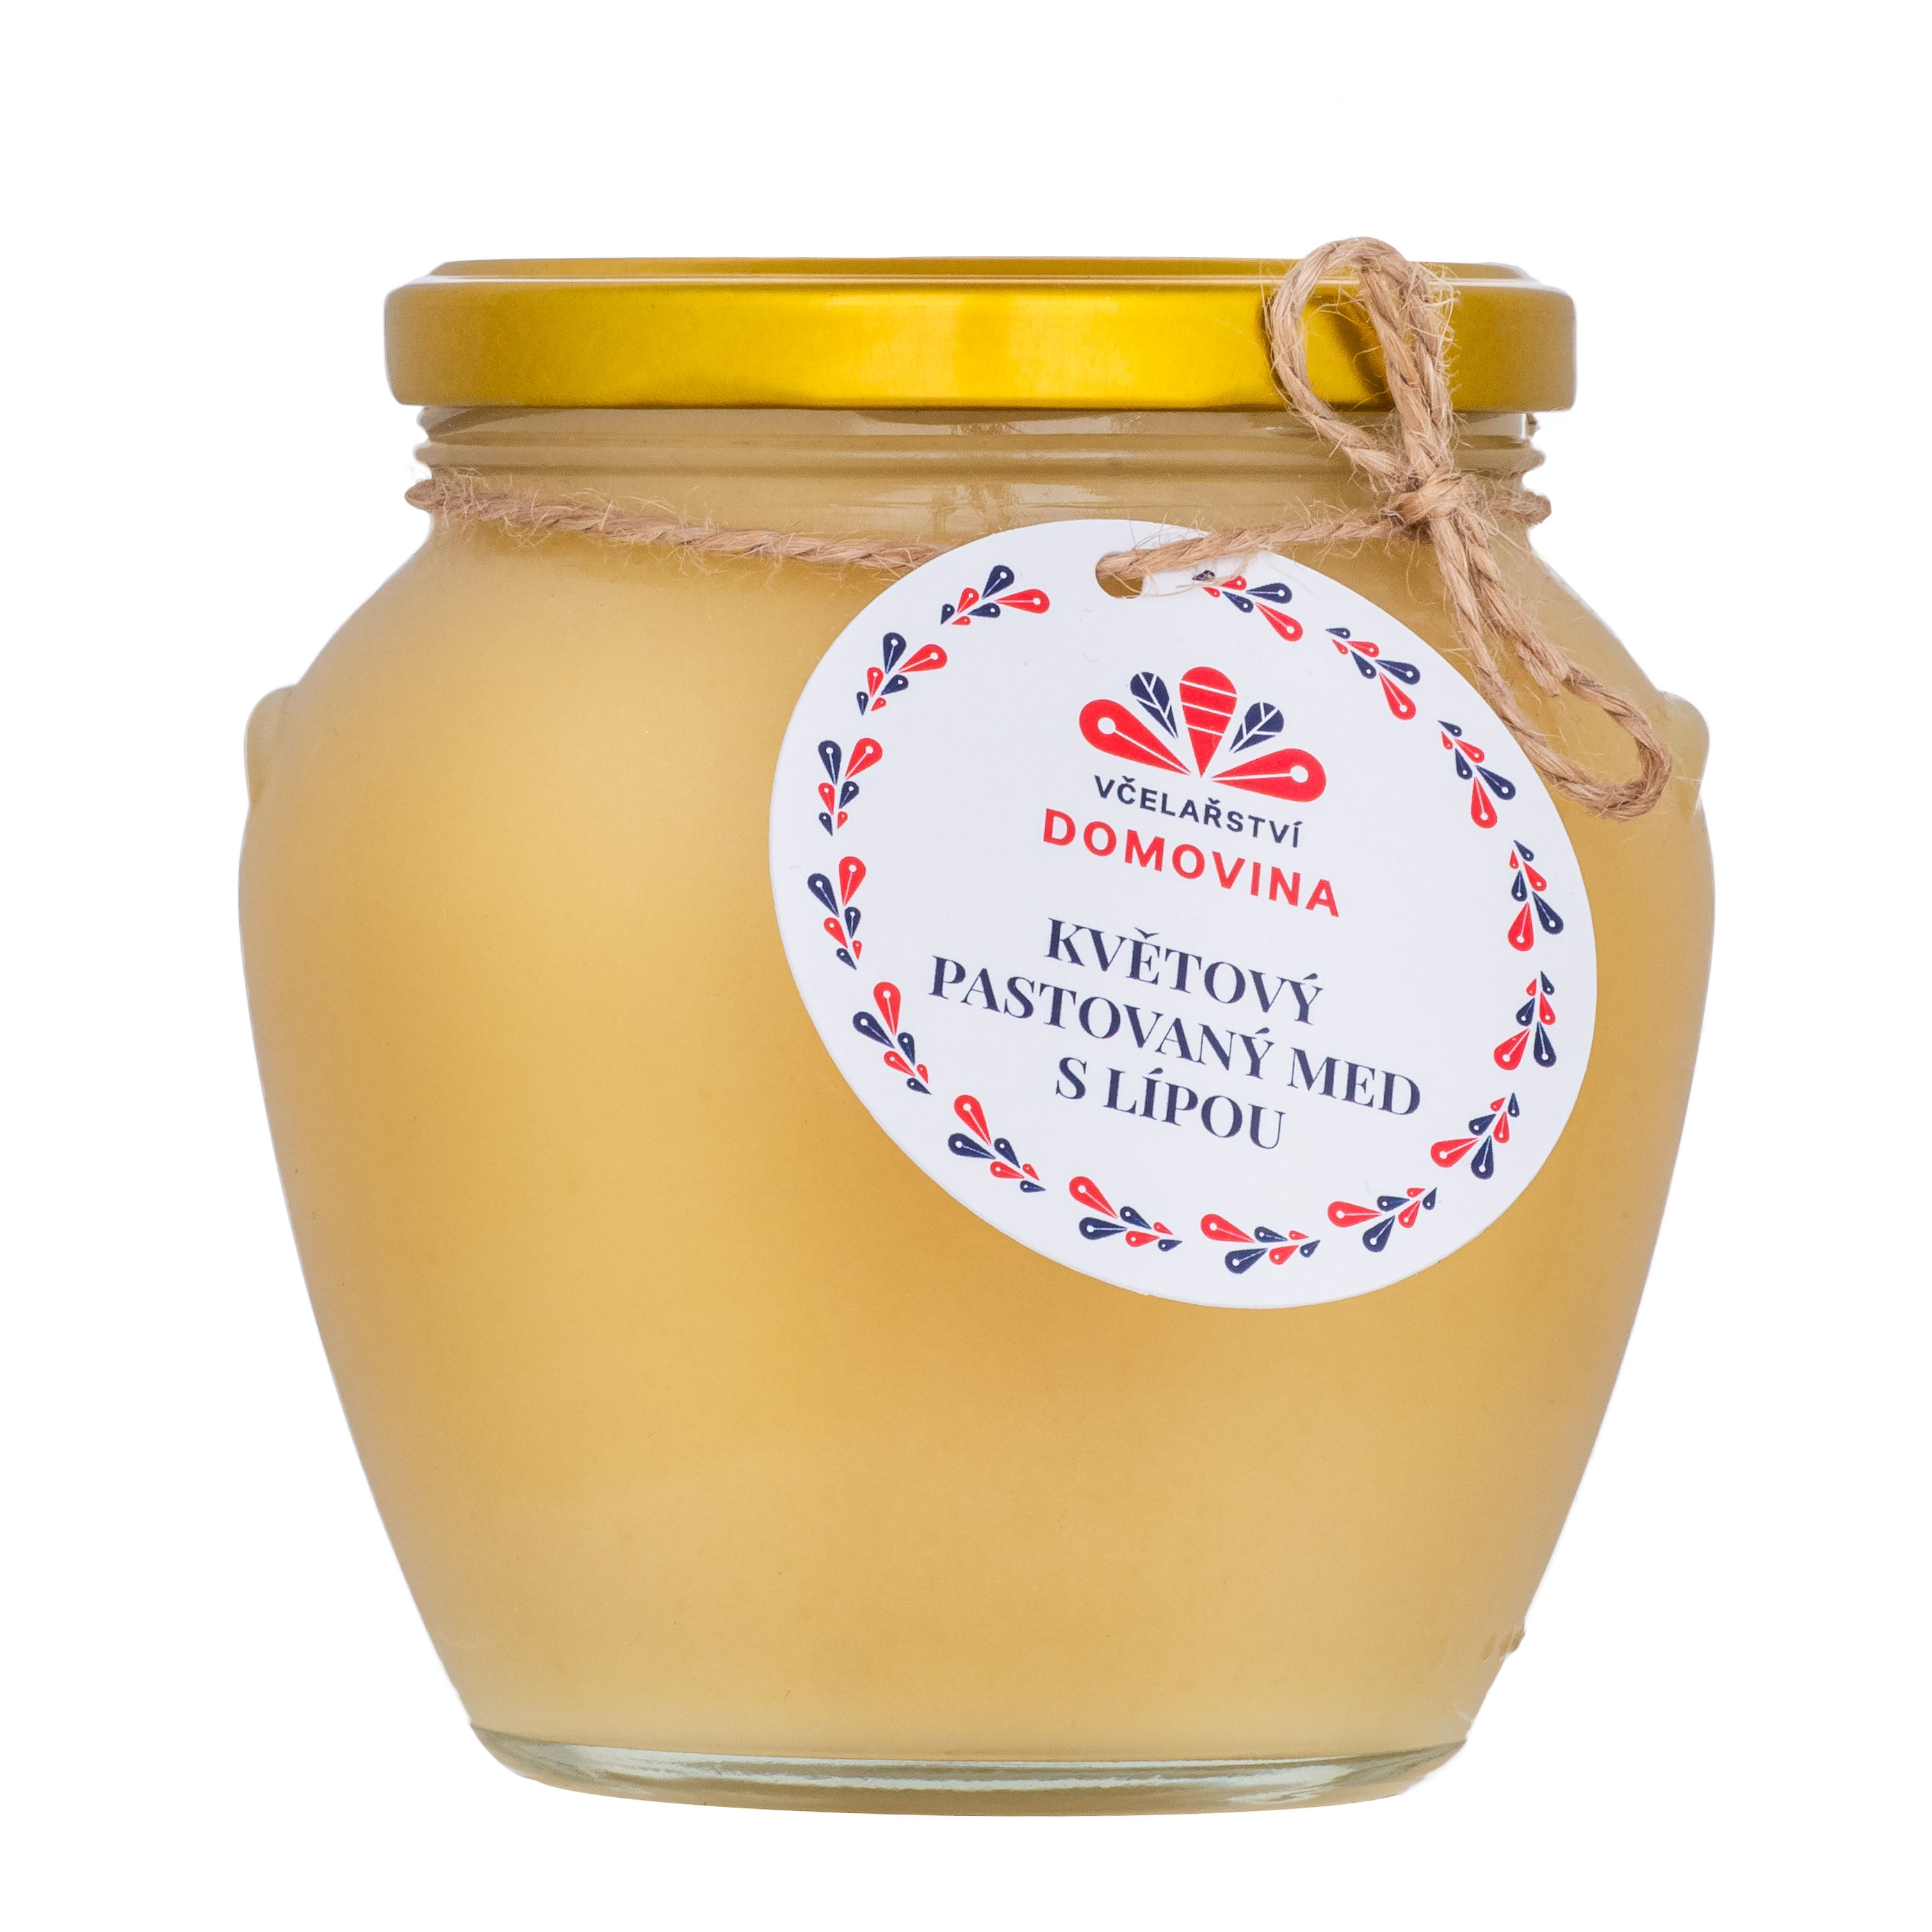 Flower honey with linden paste, weight 750 g